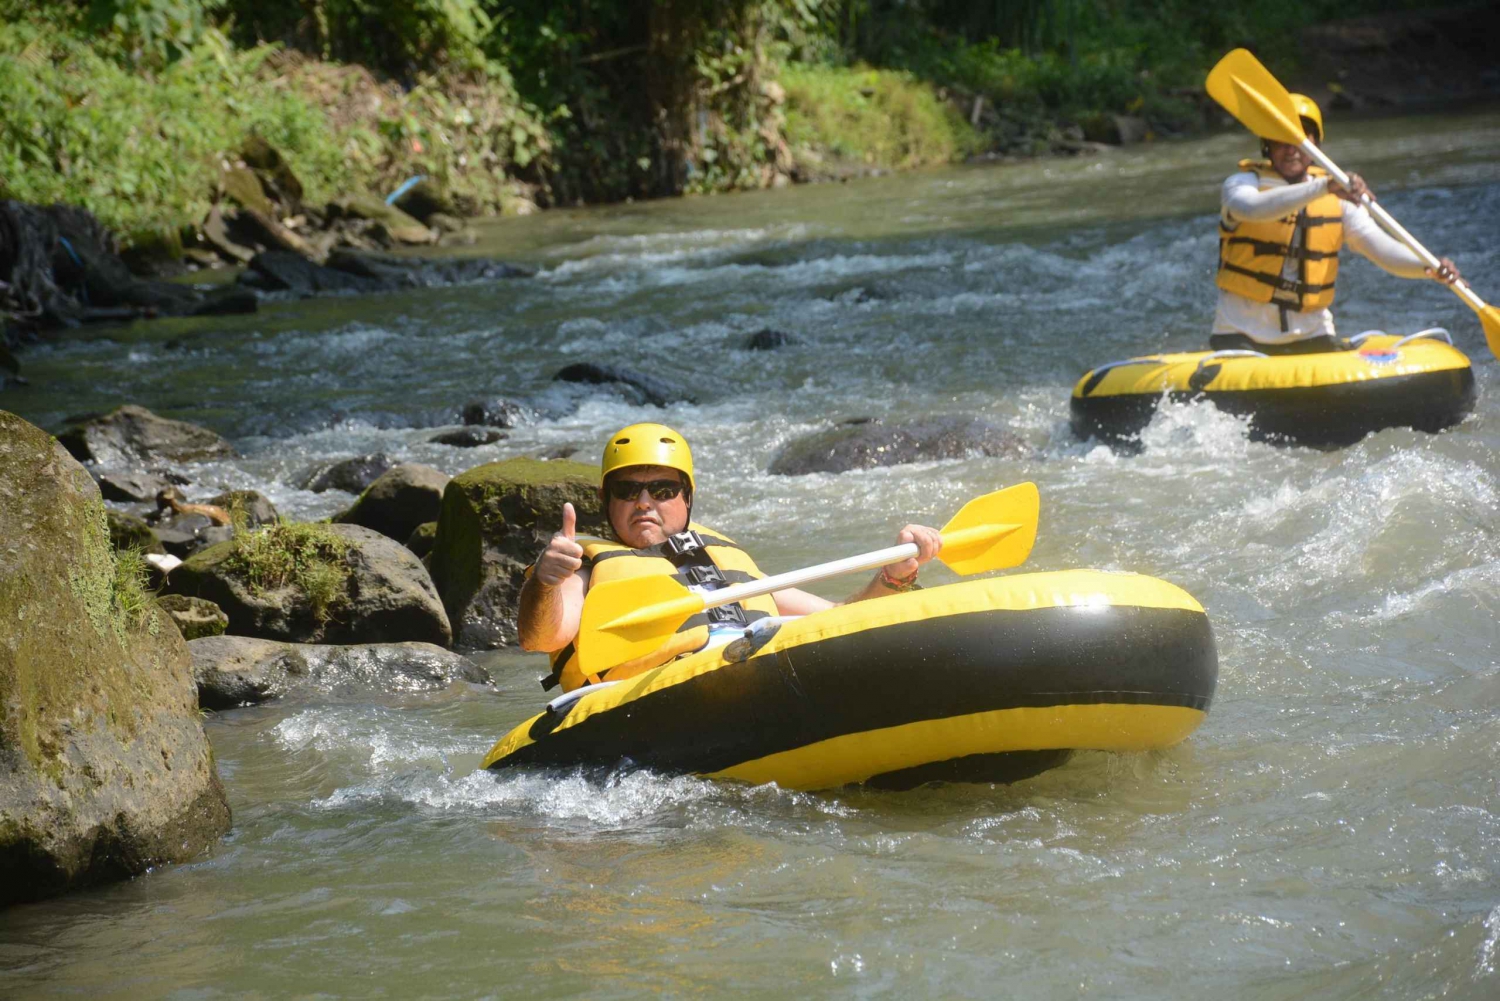 Ubud: Canyon nascosto, cascata, tour d'avventura in tubing sul fiume